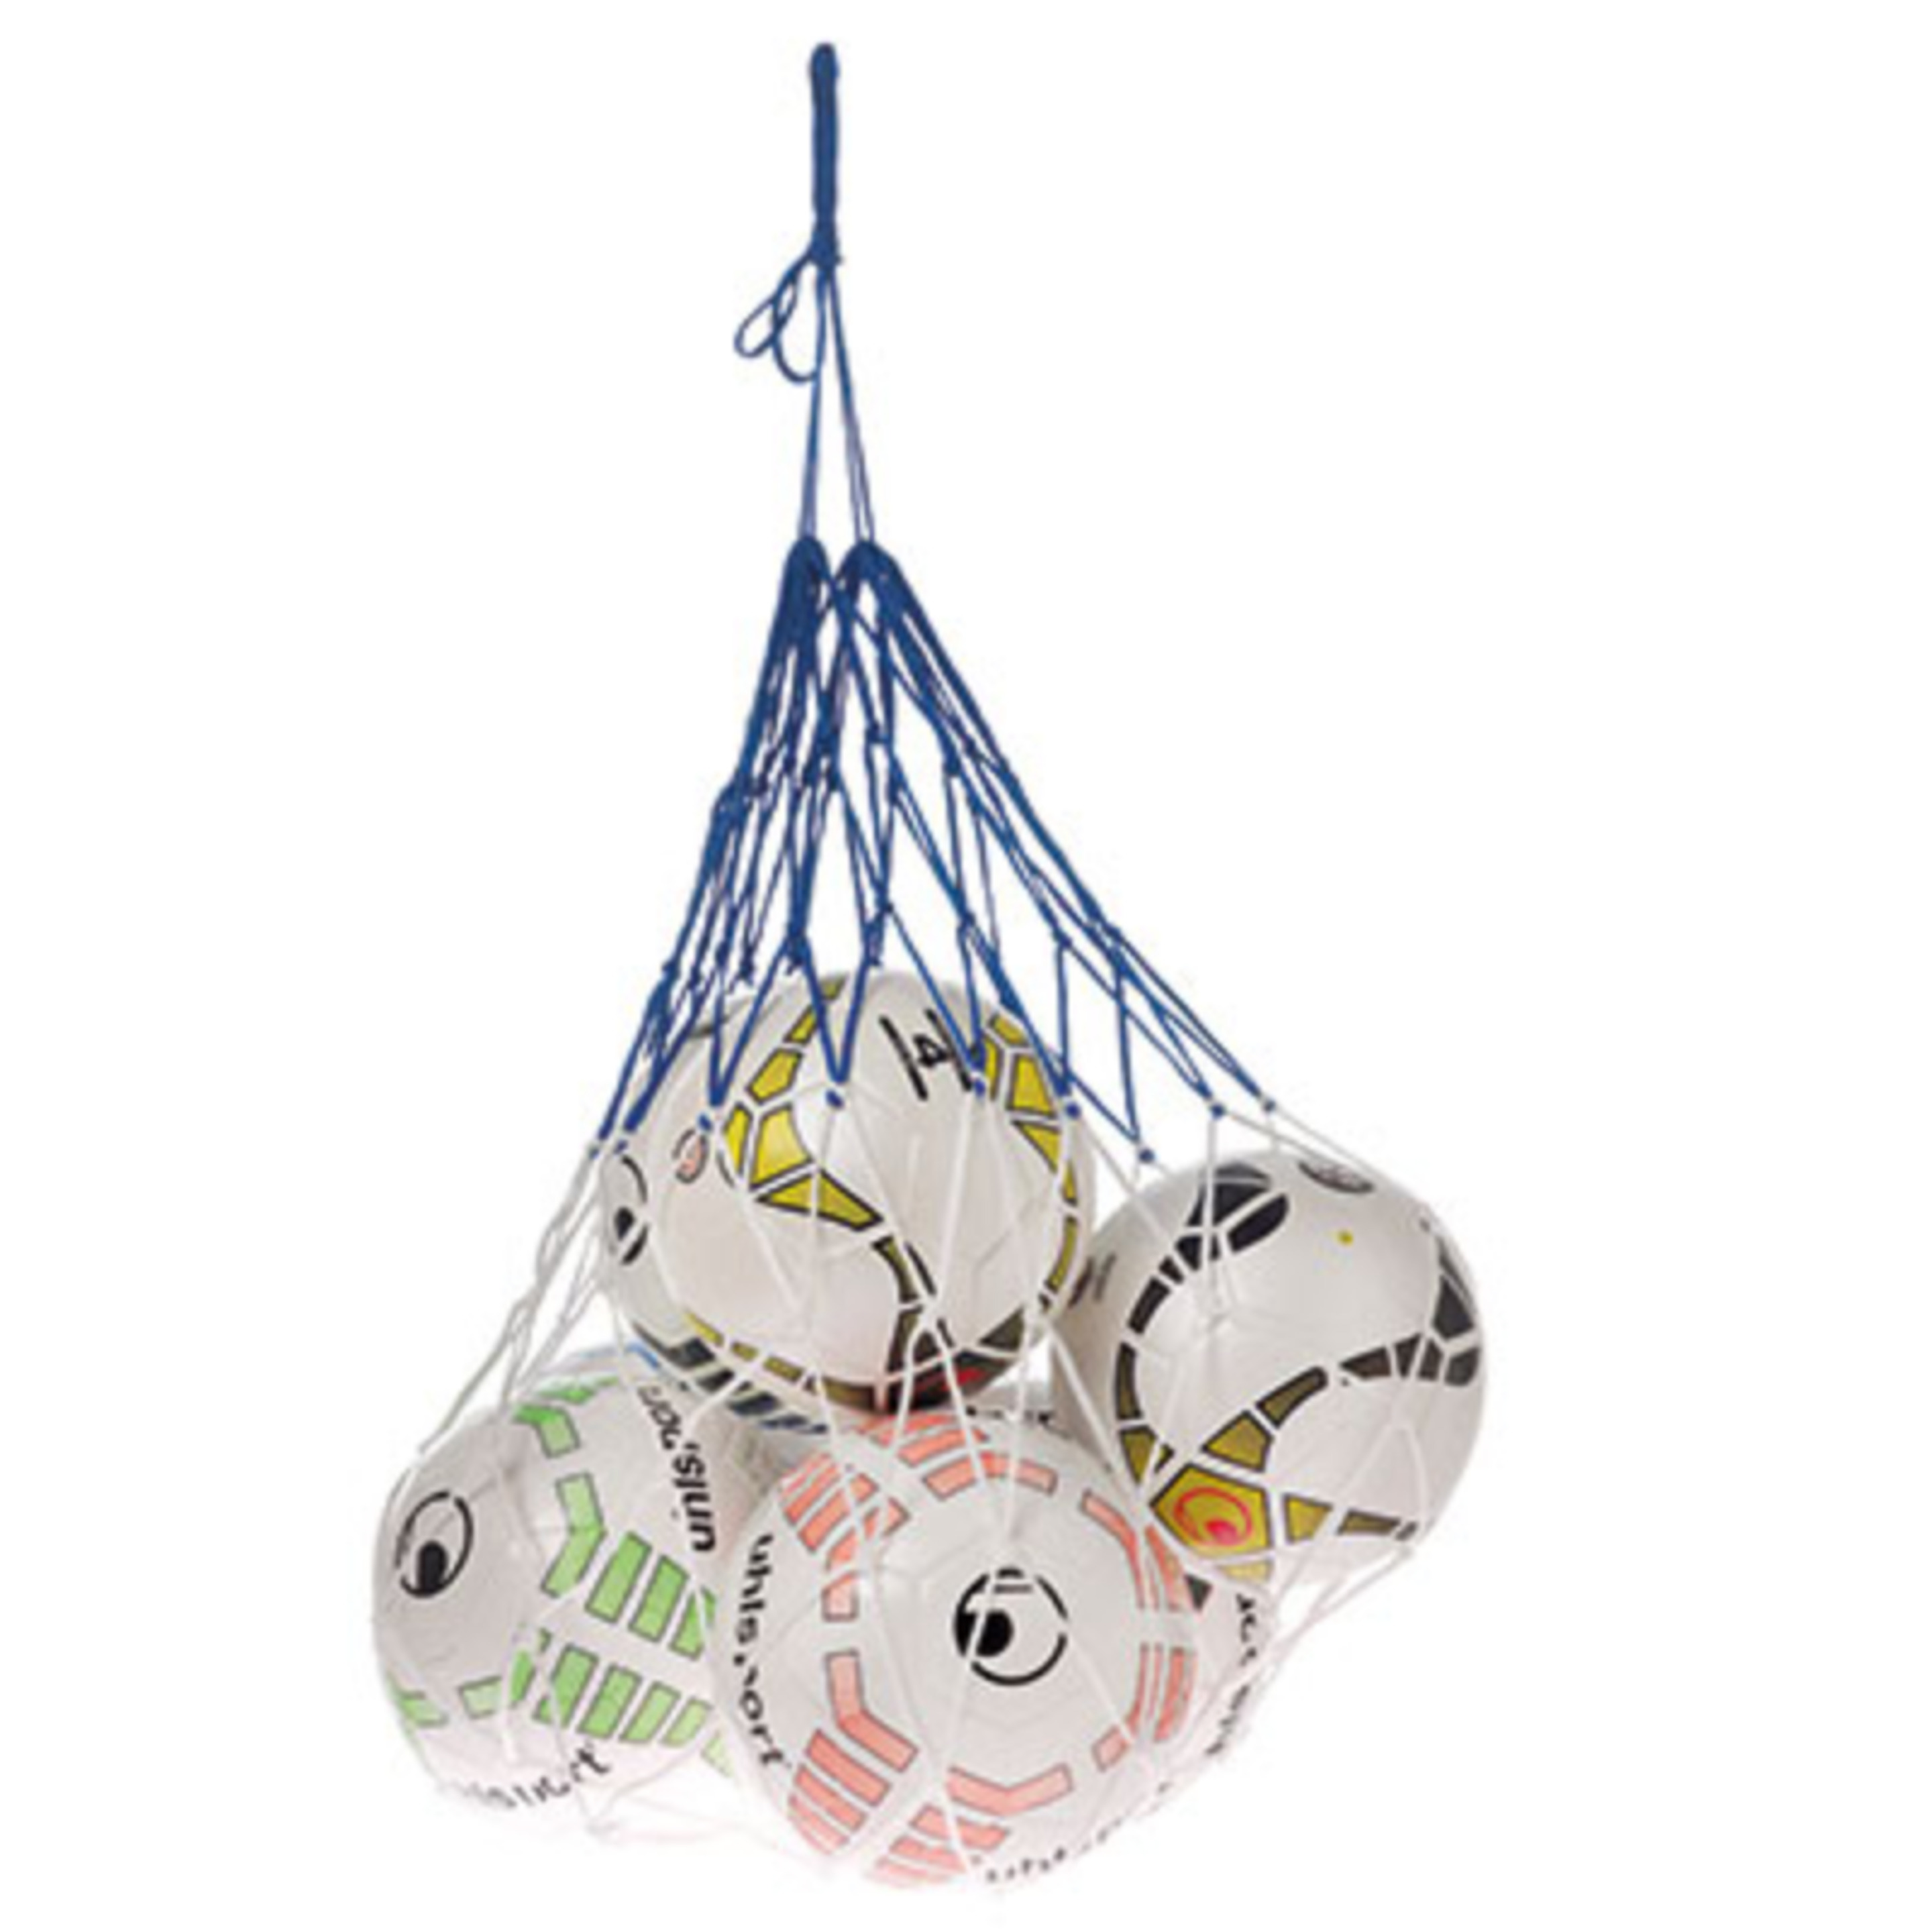 Red Para Balones (Para 12 Balones) Uhlsport - Blanco - Portabalones  MKP